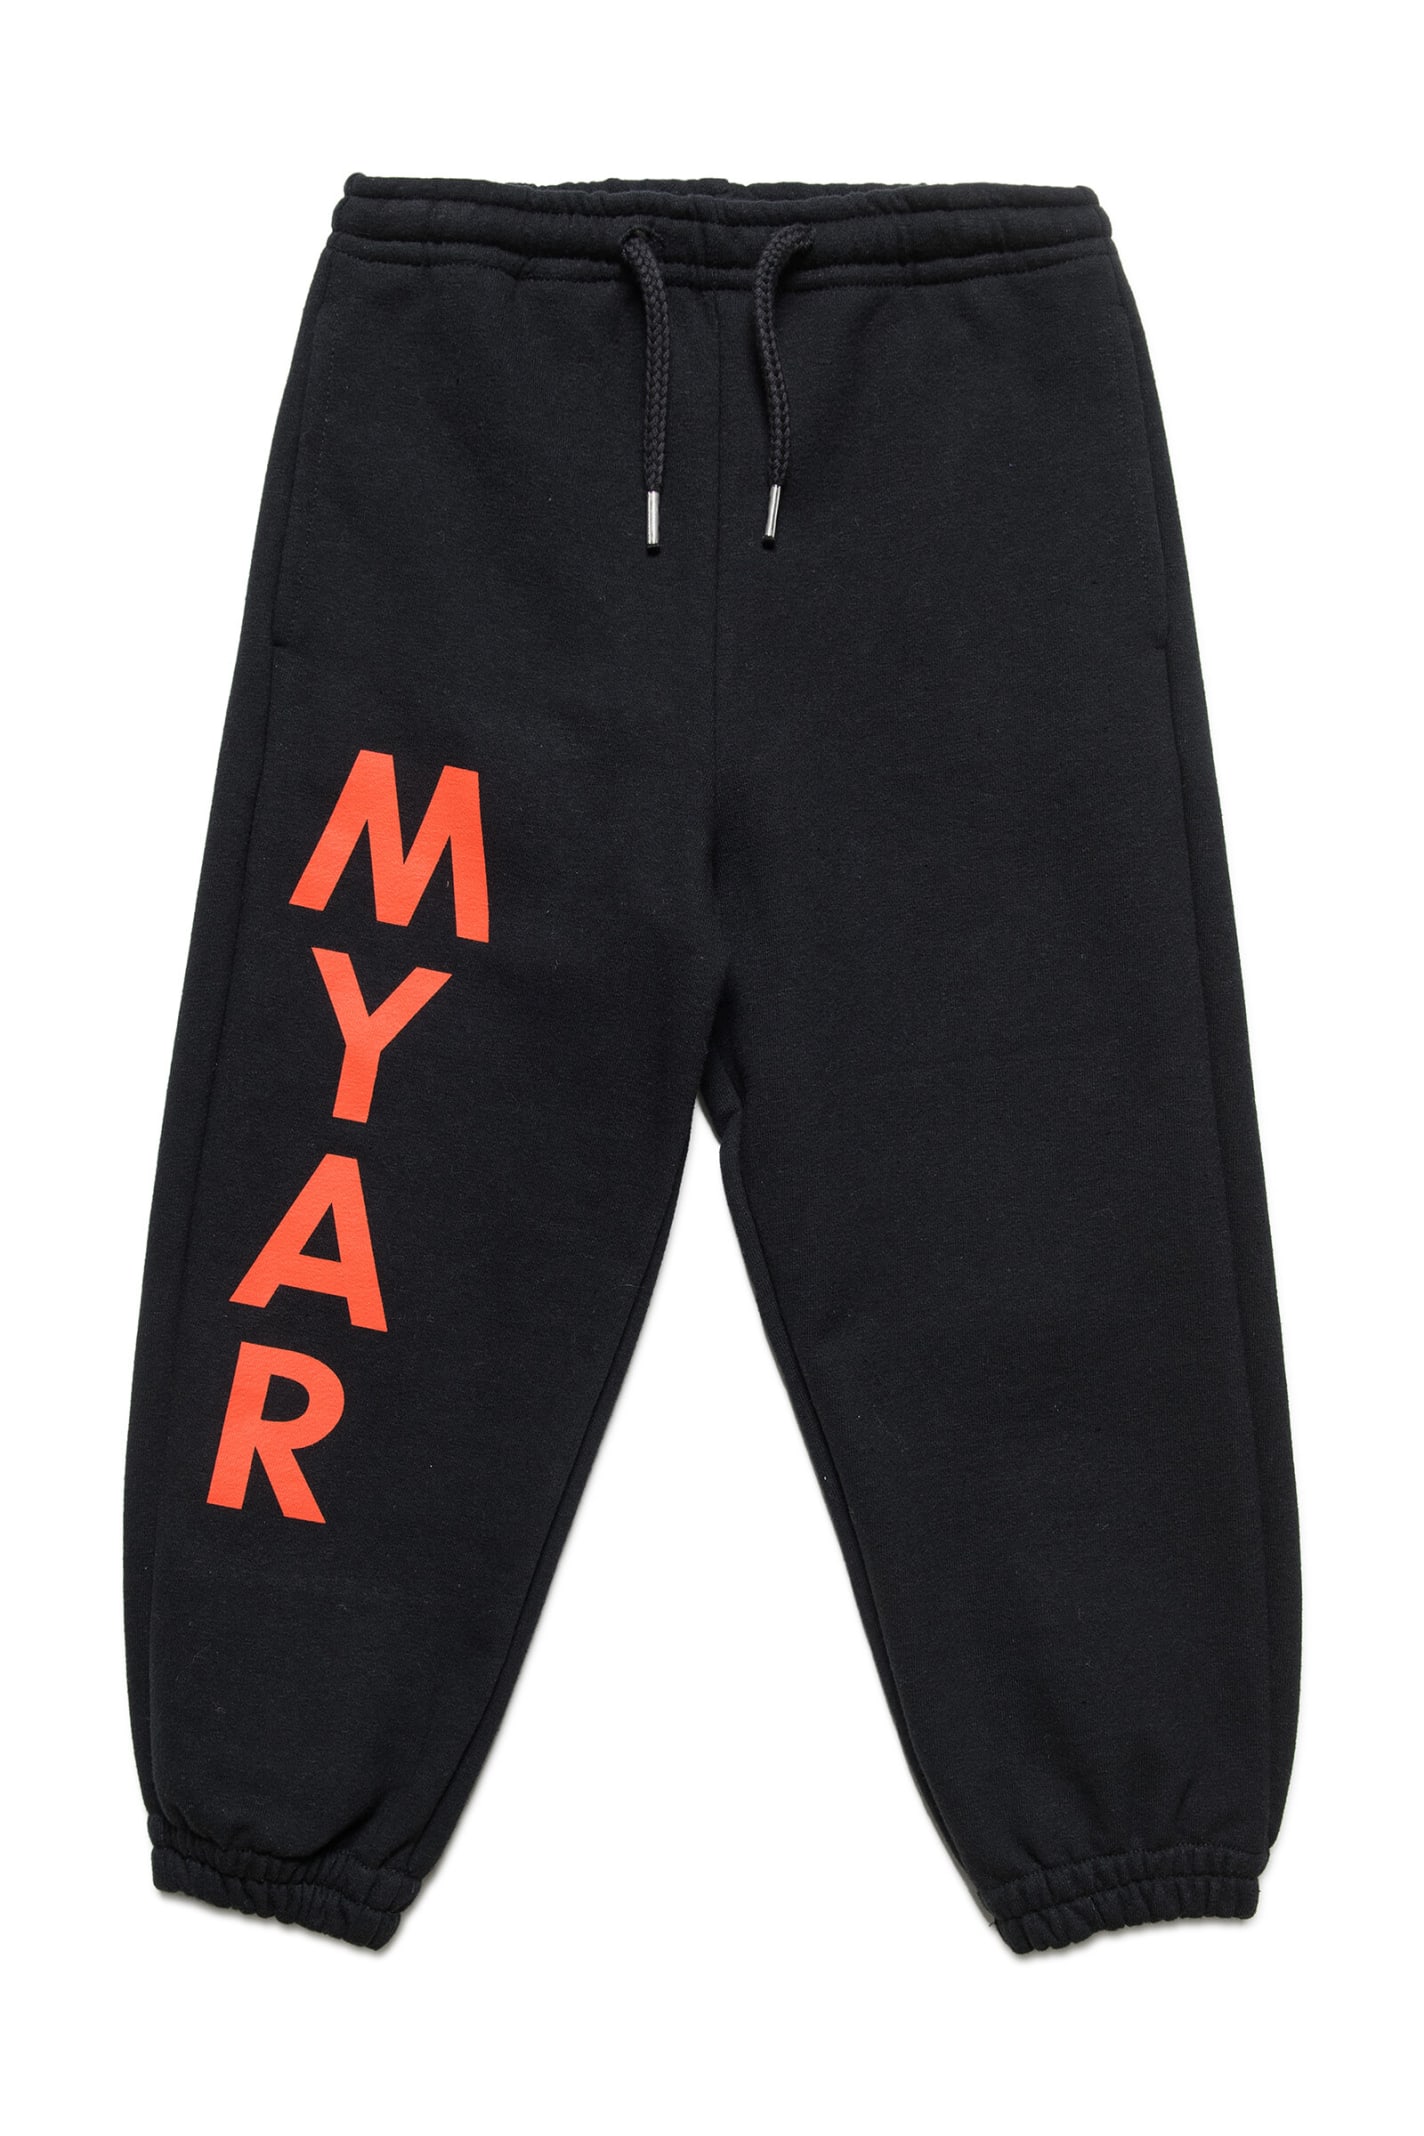 MYAR Myp5u Trousers Myar